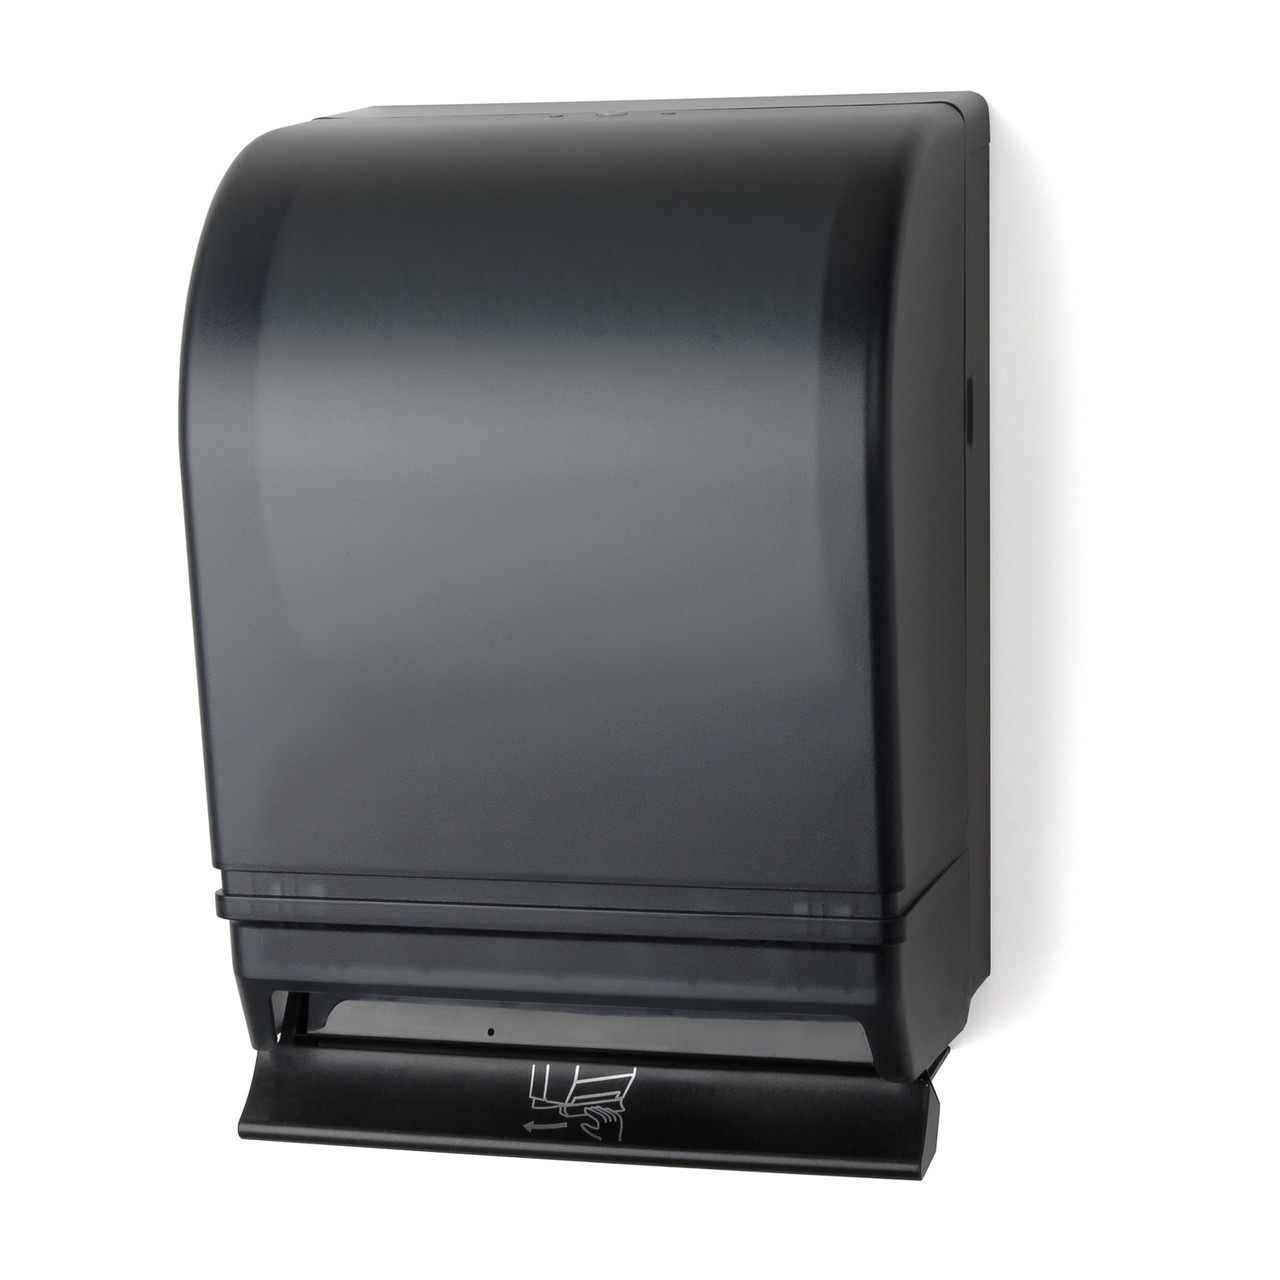 Palmer Fixture Auto-Transfer Push Bar Roll Paper Towel Dispenser with Plastic Back TD0216-02